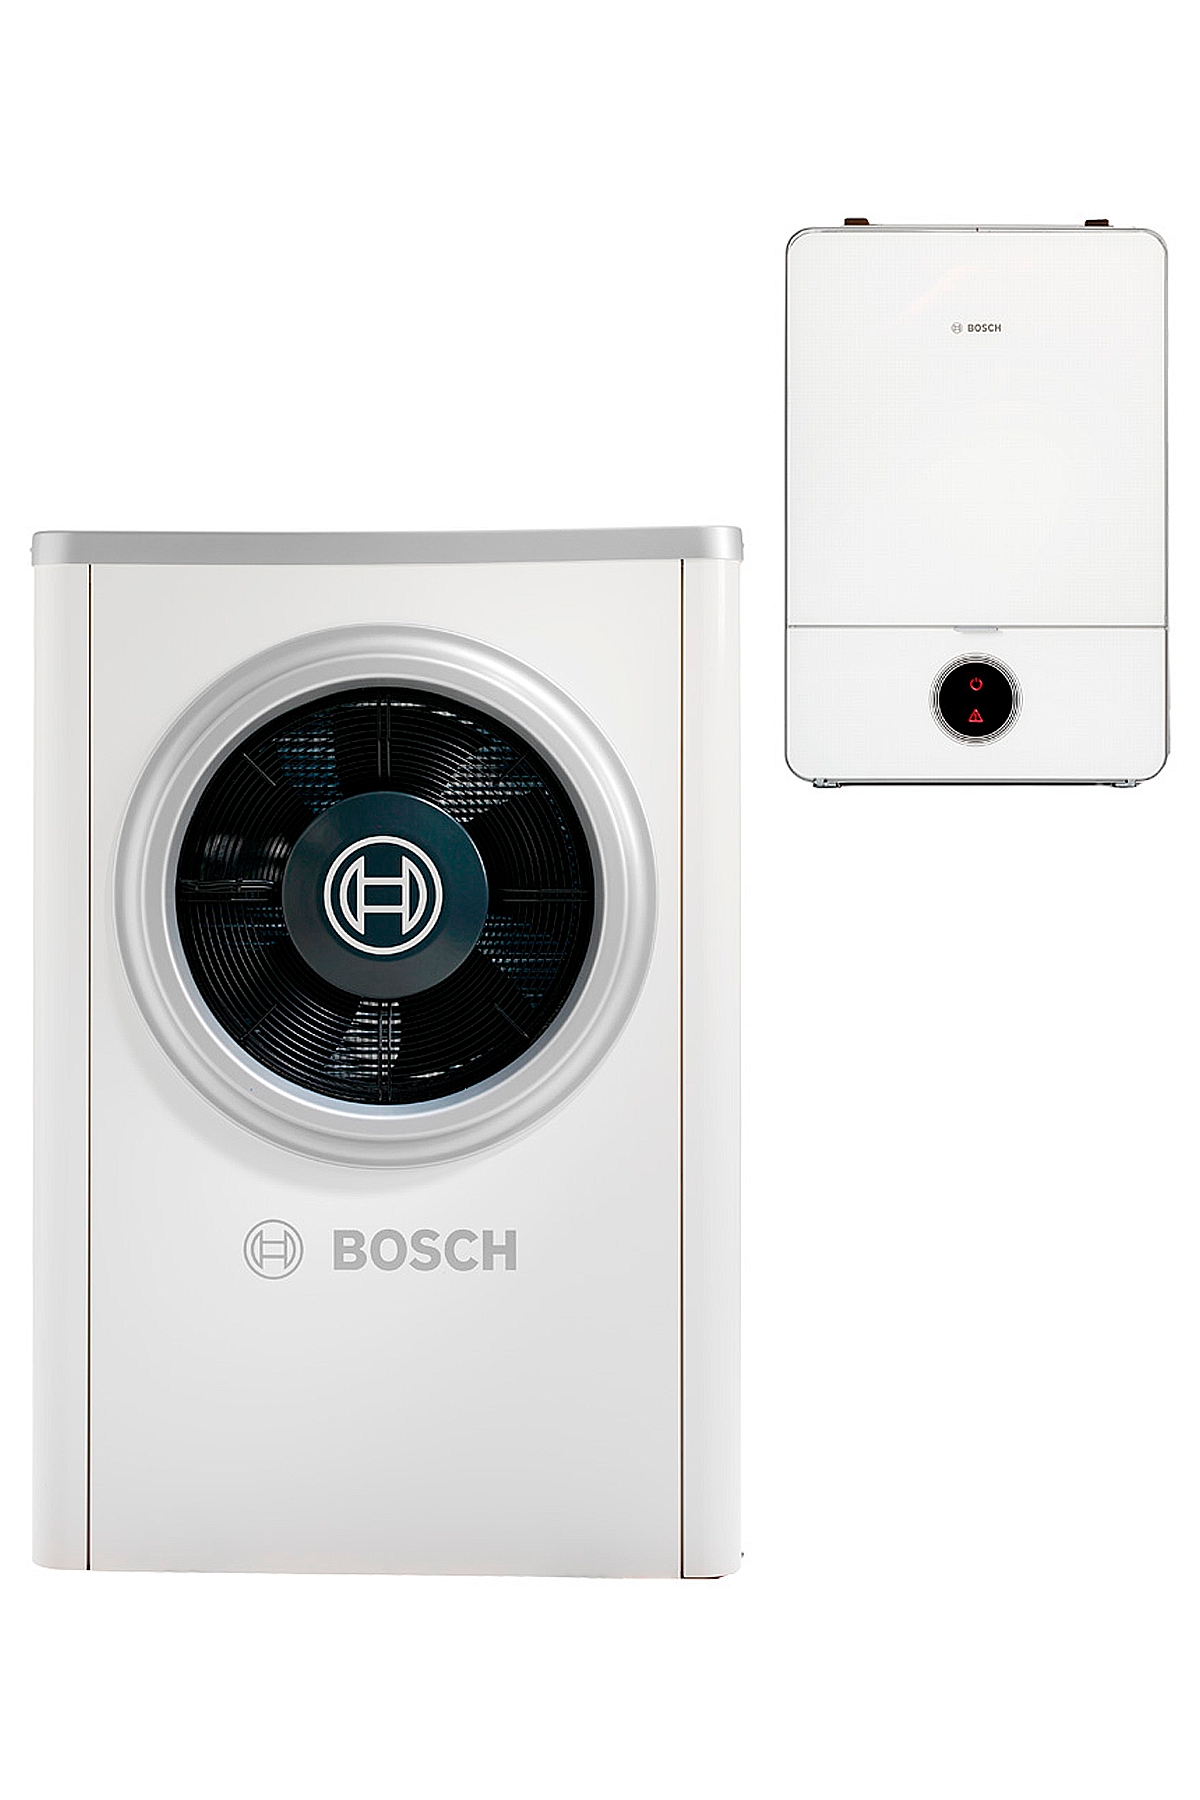 Цена тепловой насос Bosch Compress 7000i AW 7 B в Ивано-Франковске